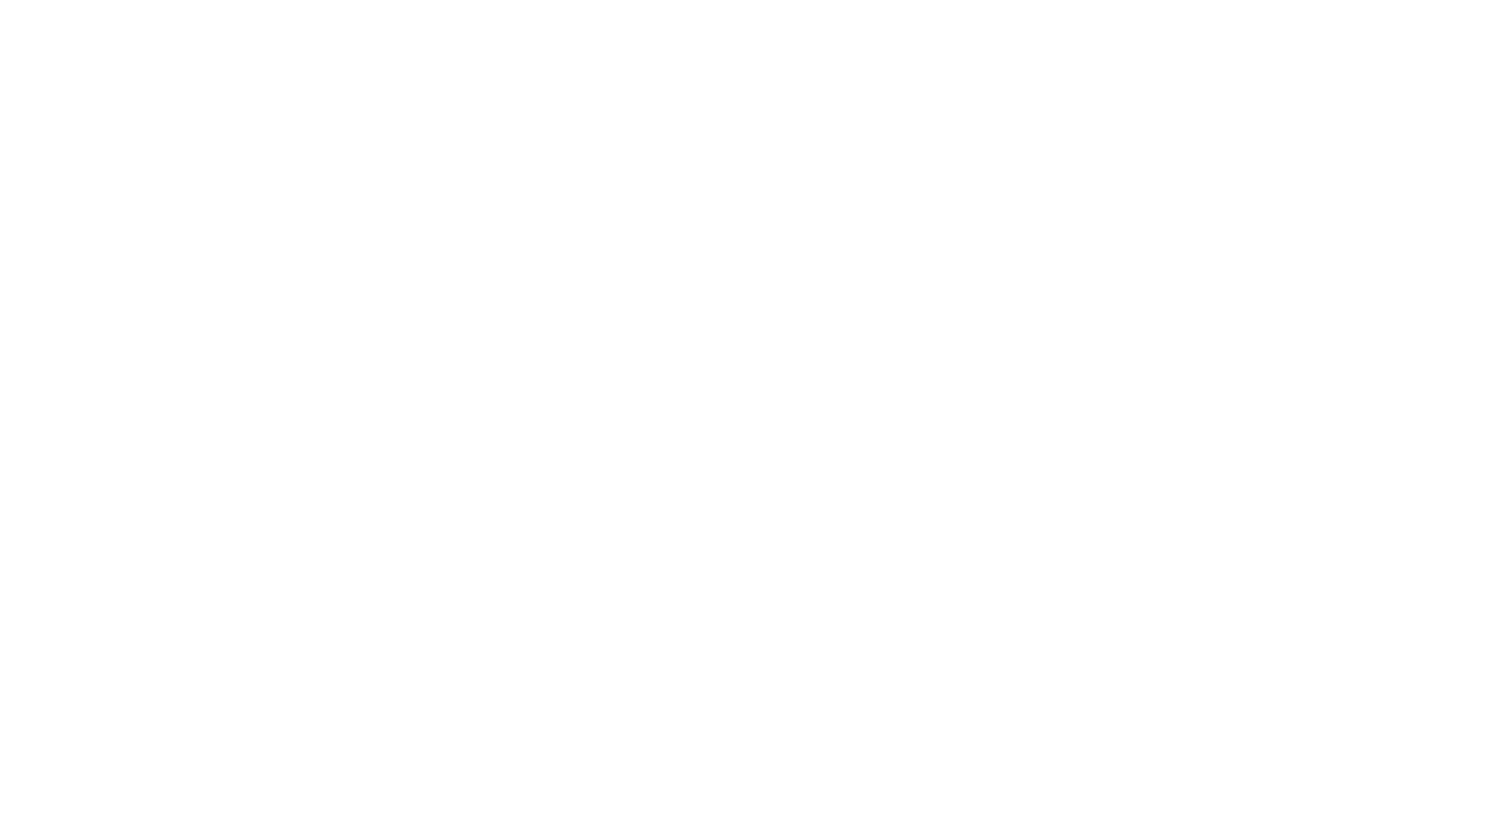 STAR Community School